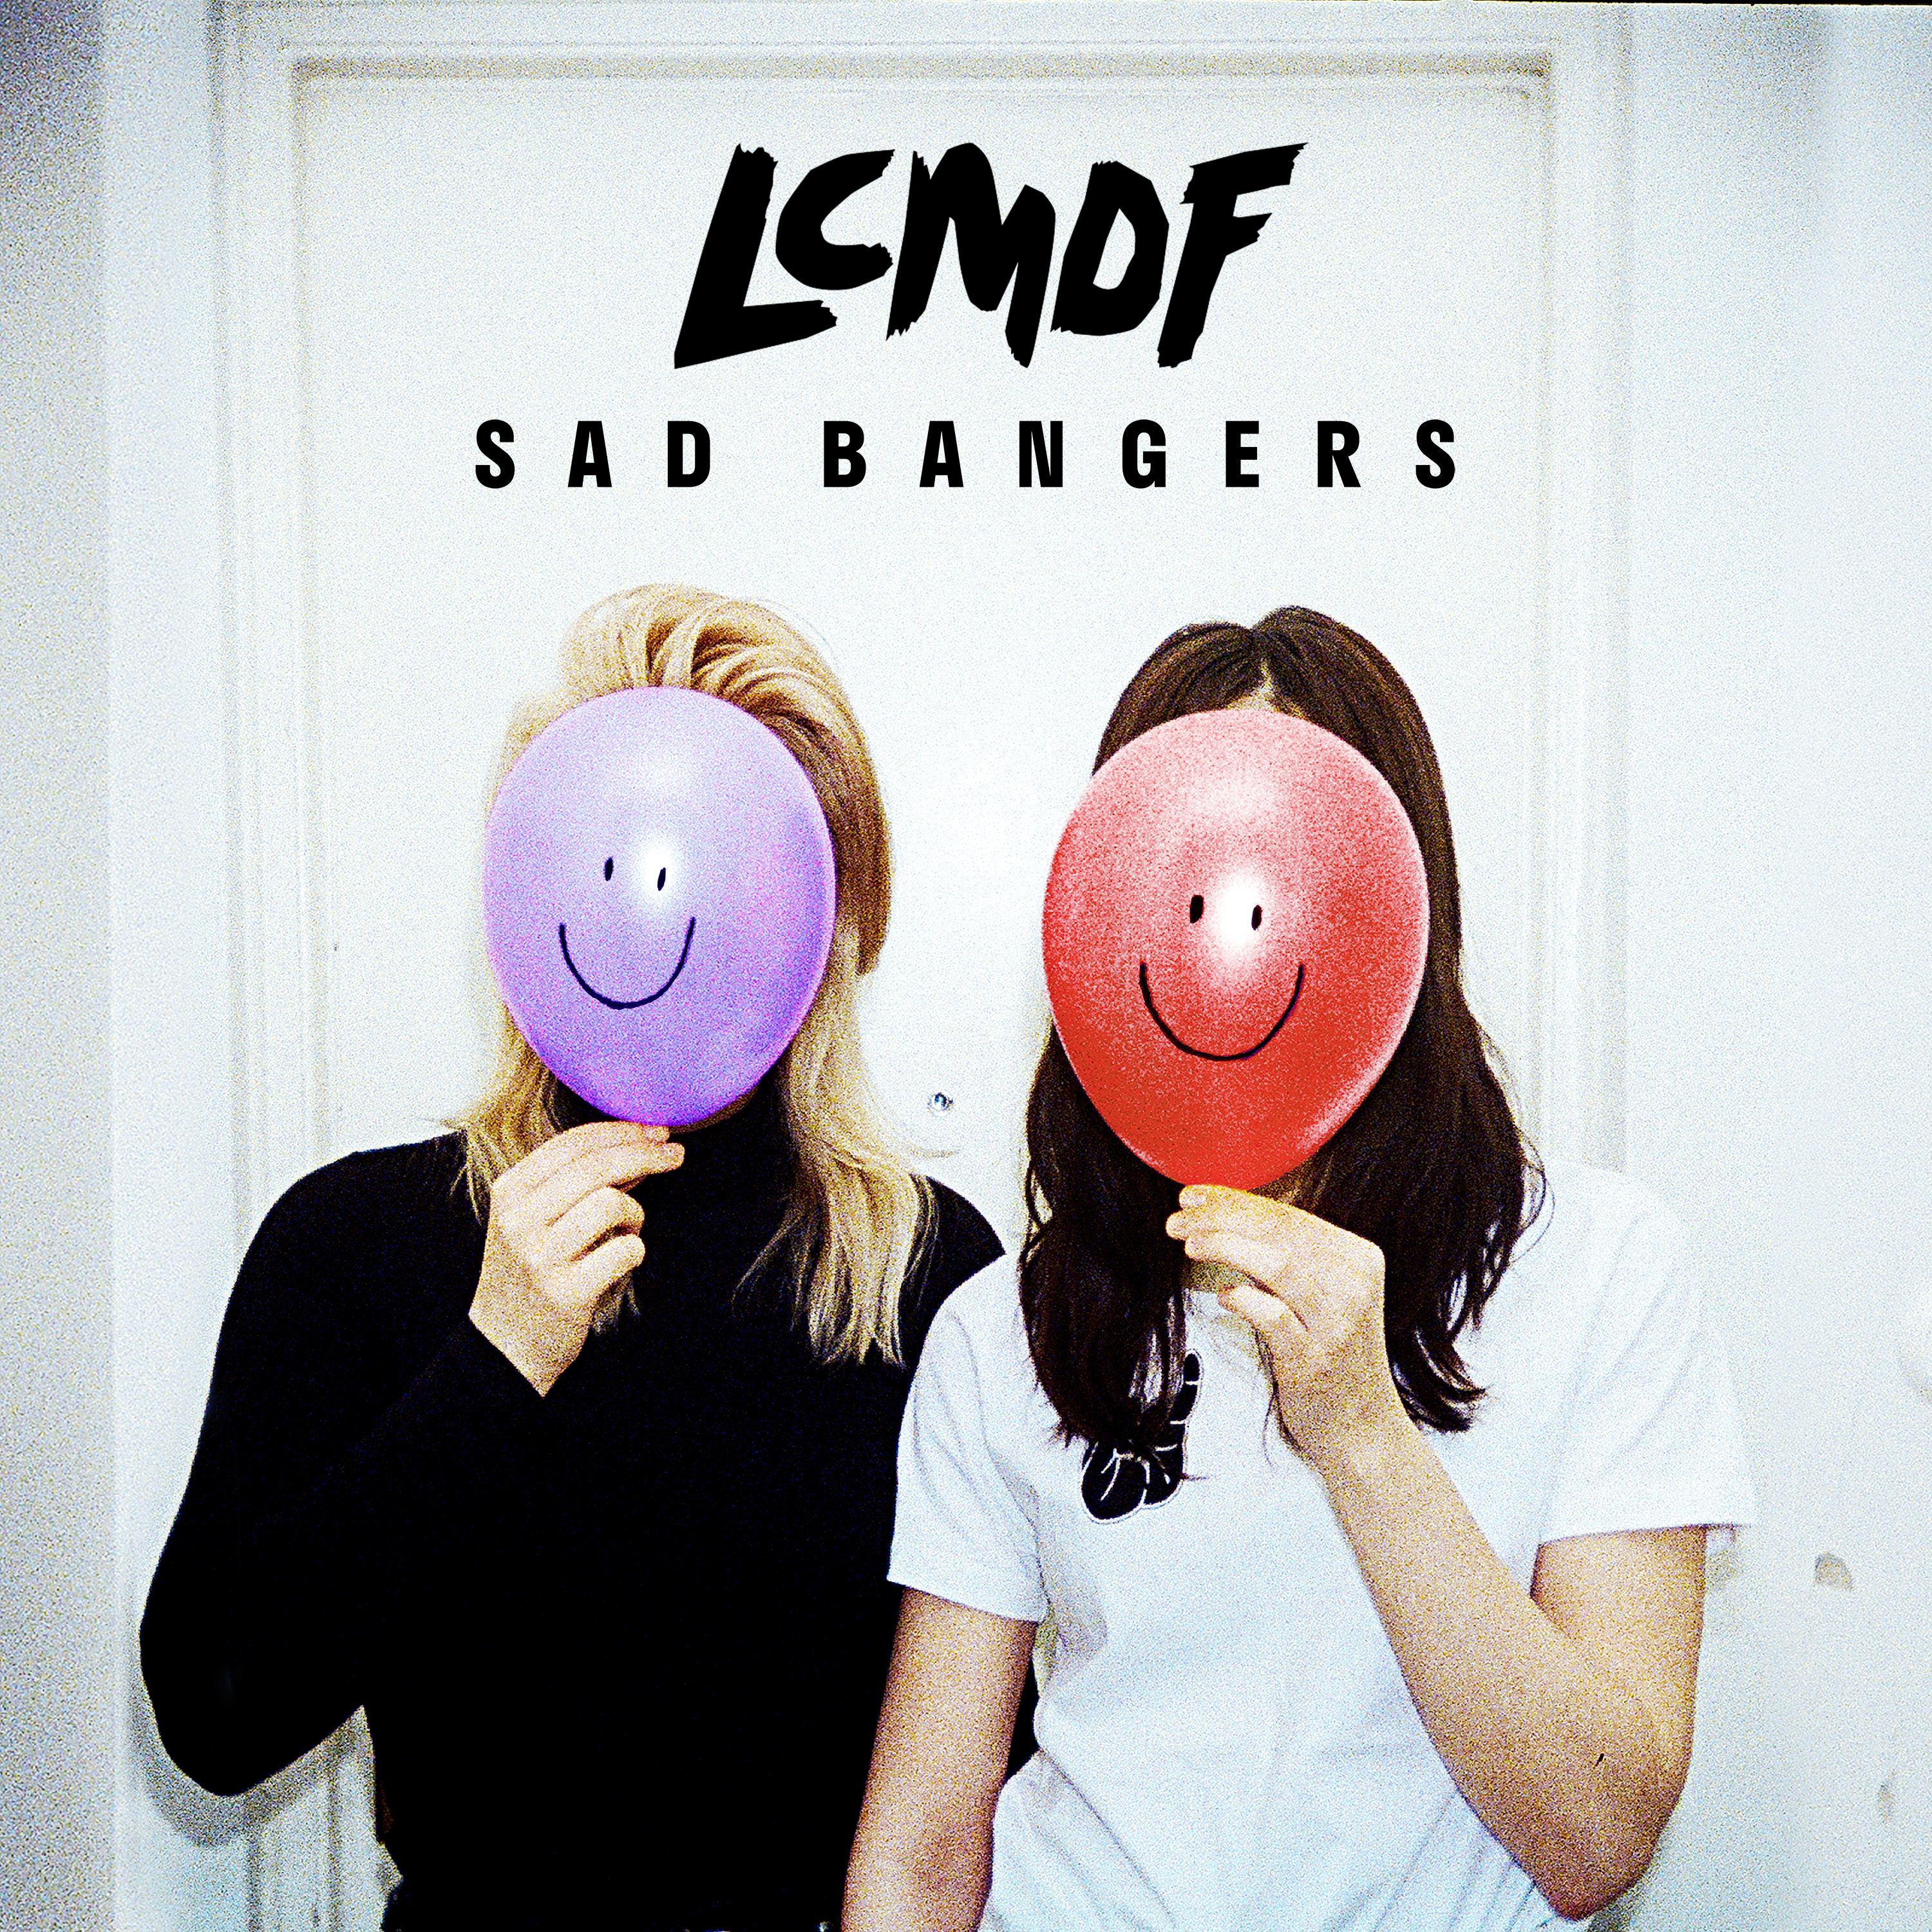 LCMDF - Sad Bangers - CD